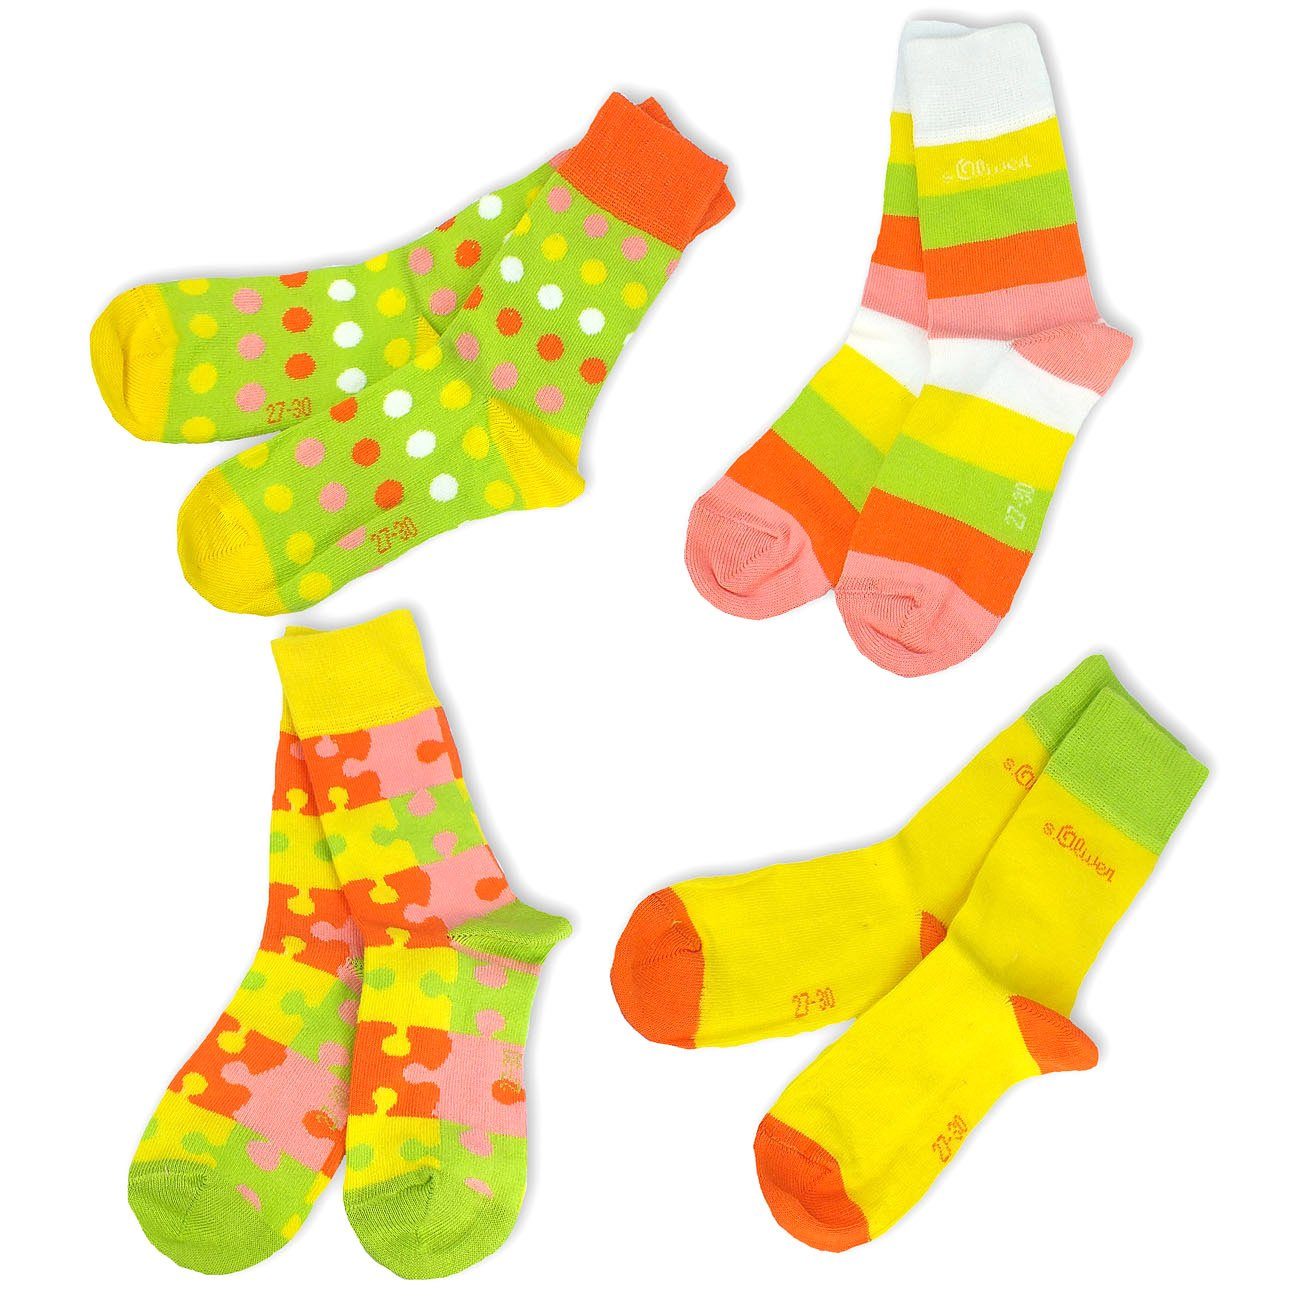 Kindersocken 4 Langsocken Mädchen Paar) s.Oliver & 80 Jungen Socken, mit Kinder S20227 gelb 4-Paar, Baumwolle, (Set,